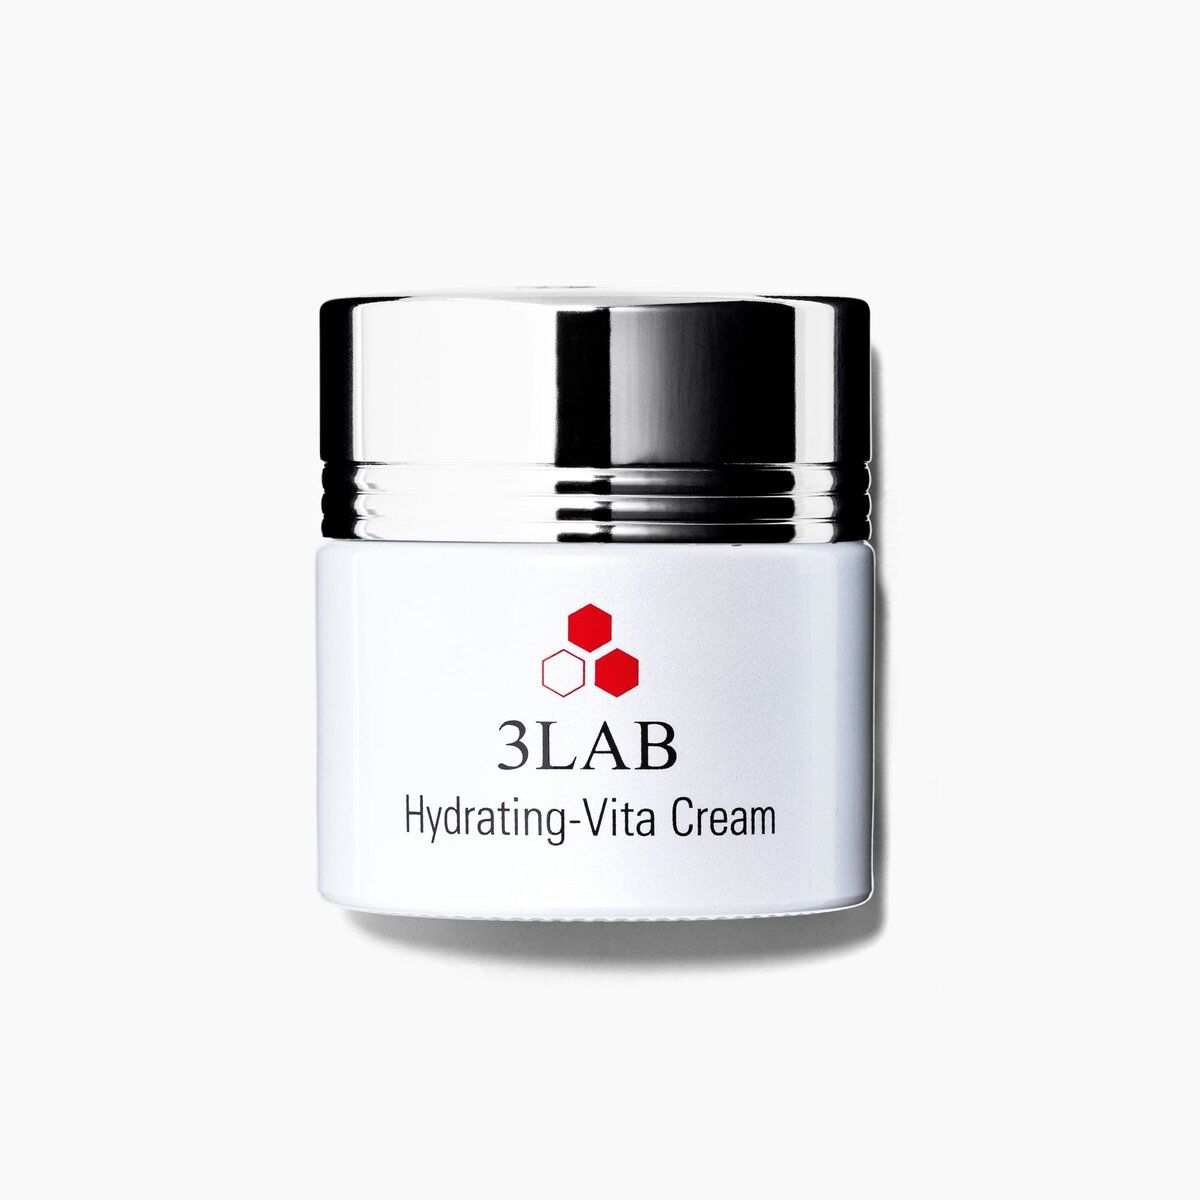 3LAB - Hydrating-Vita Cream